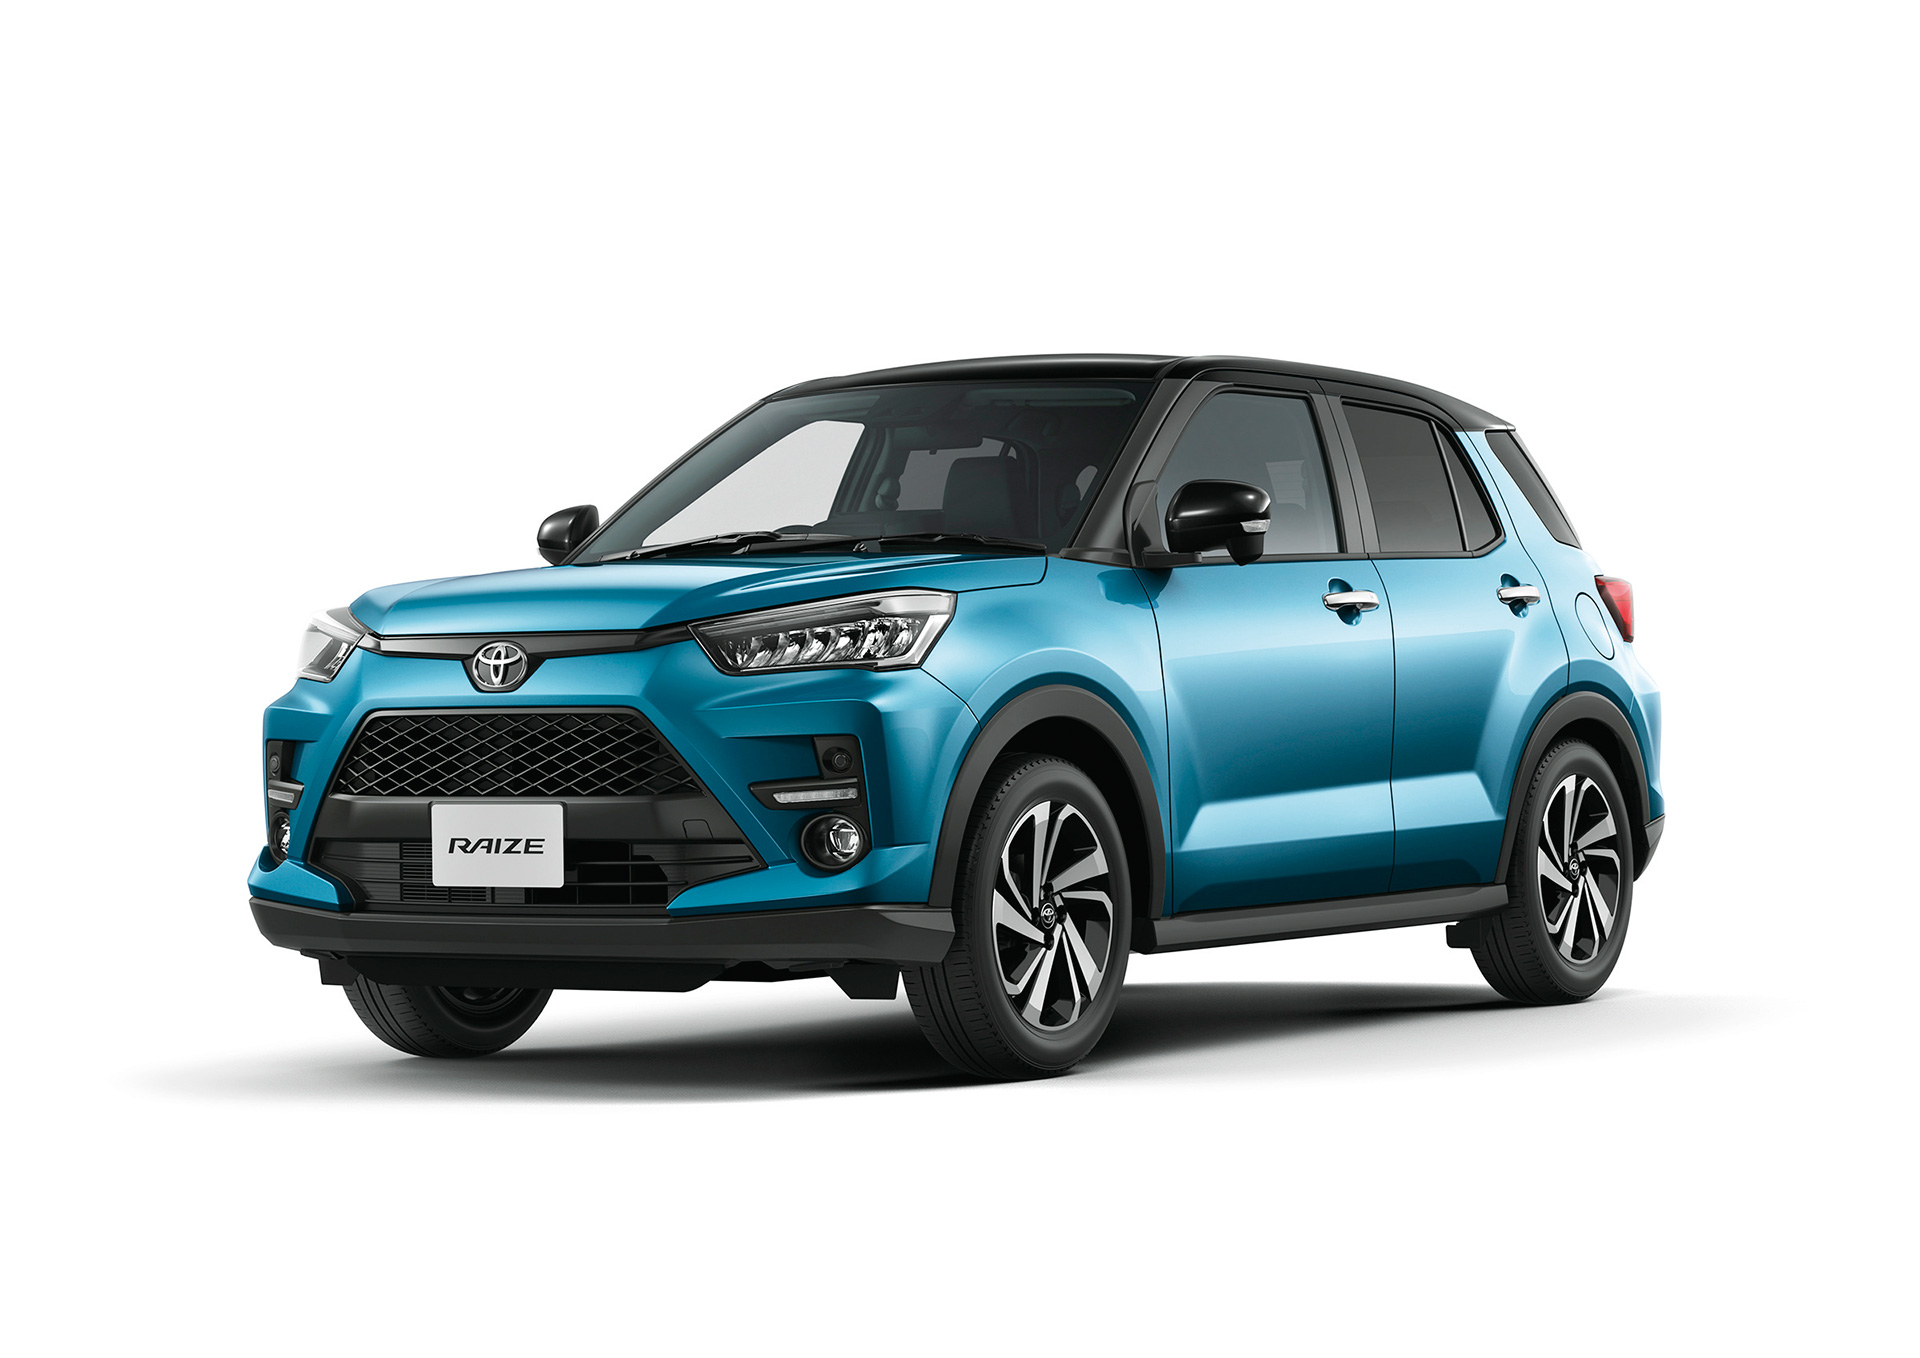 Toyota Raize é o SUV compacto da marca na cor azul com faróis horizontais repuxados e entrada de ar inferior trapezoidal e escura